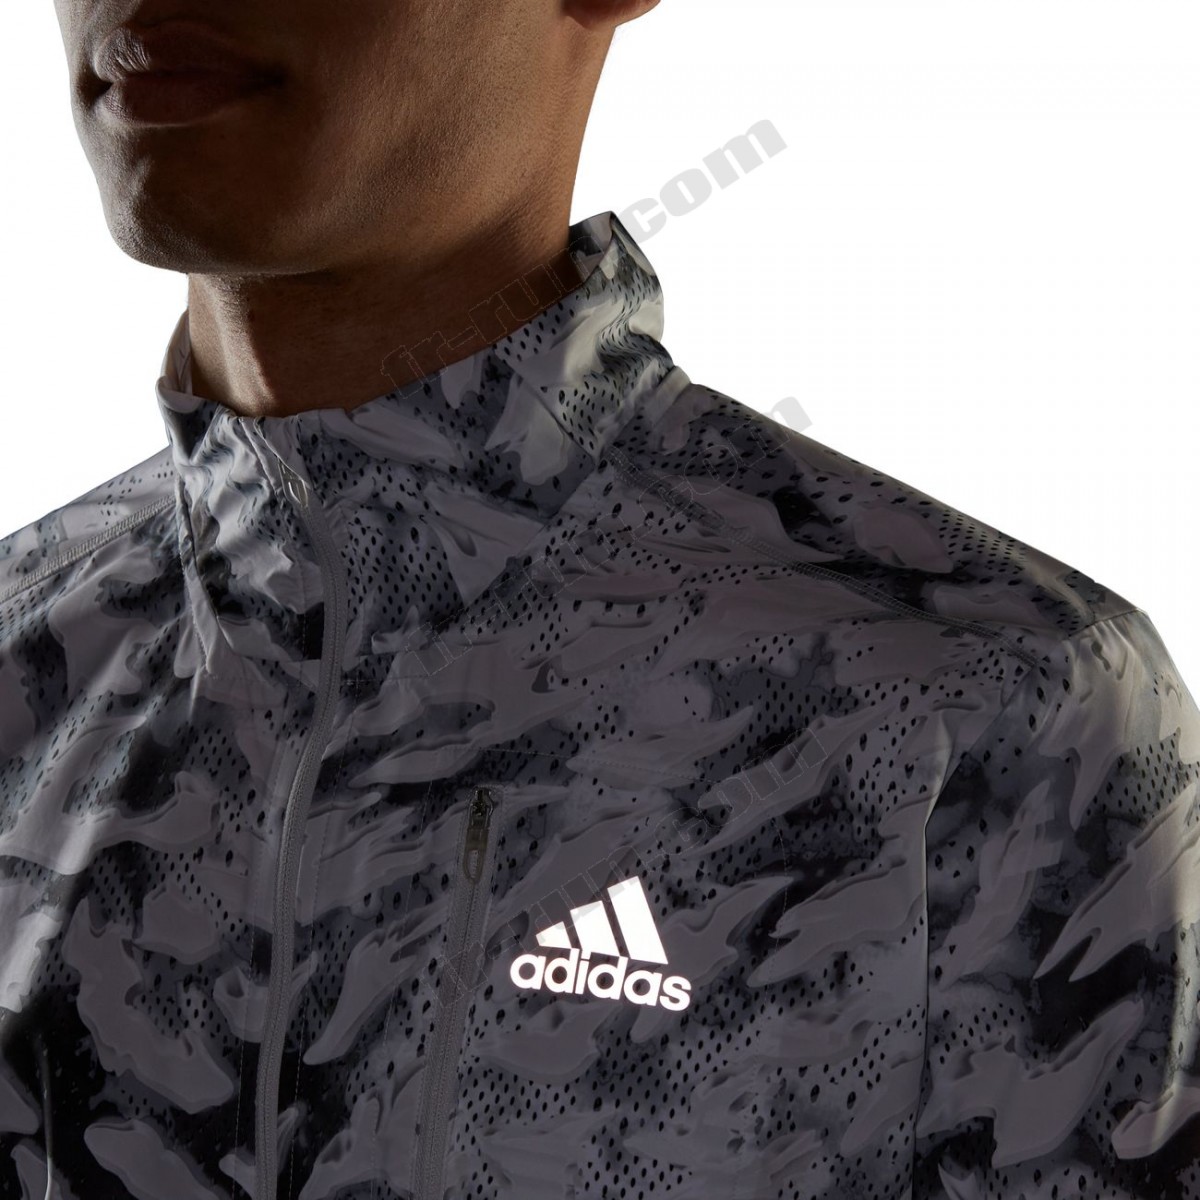 Adidas/running homme ADIDAS Adidas Fast Graphic Primeblue ◇◇◇ Pas Cher Du Tout - -6